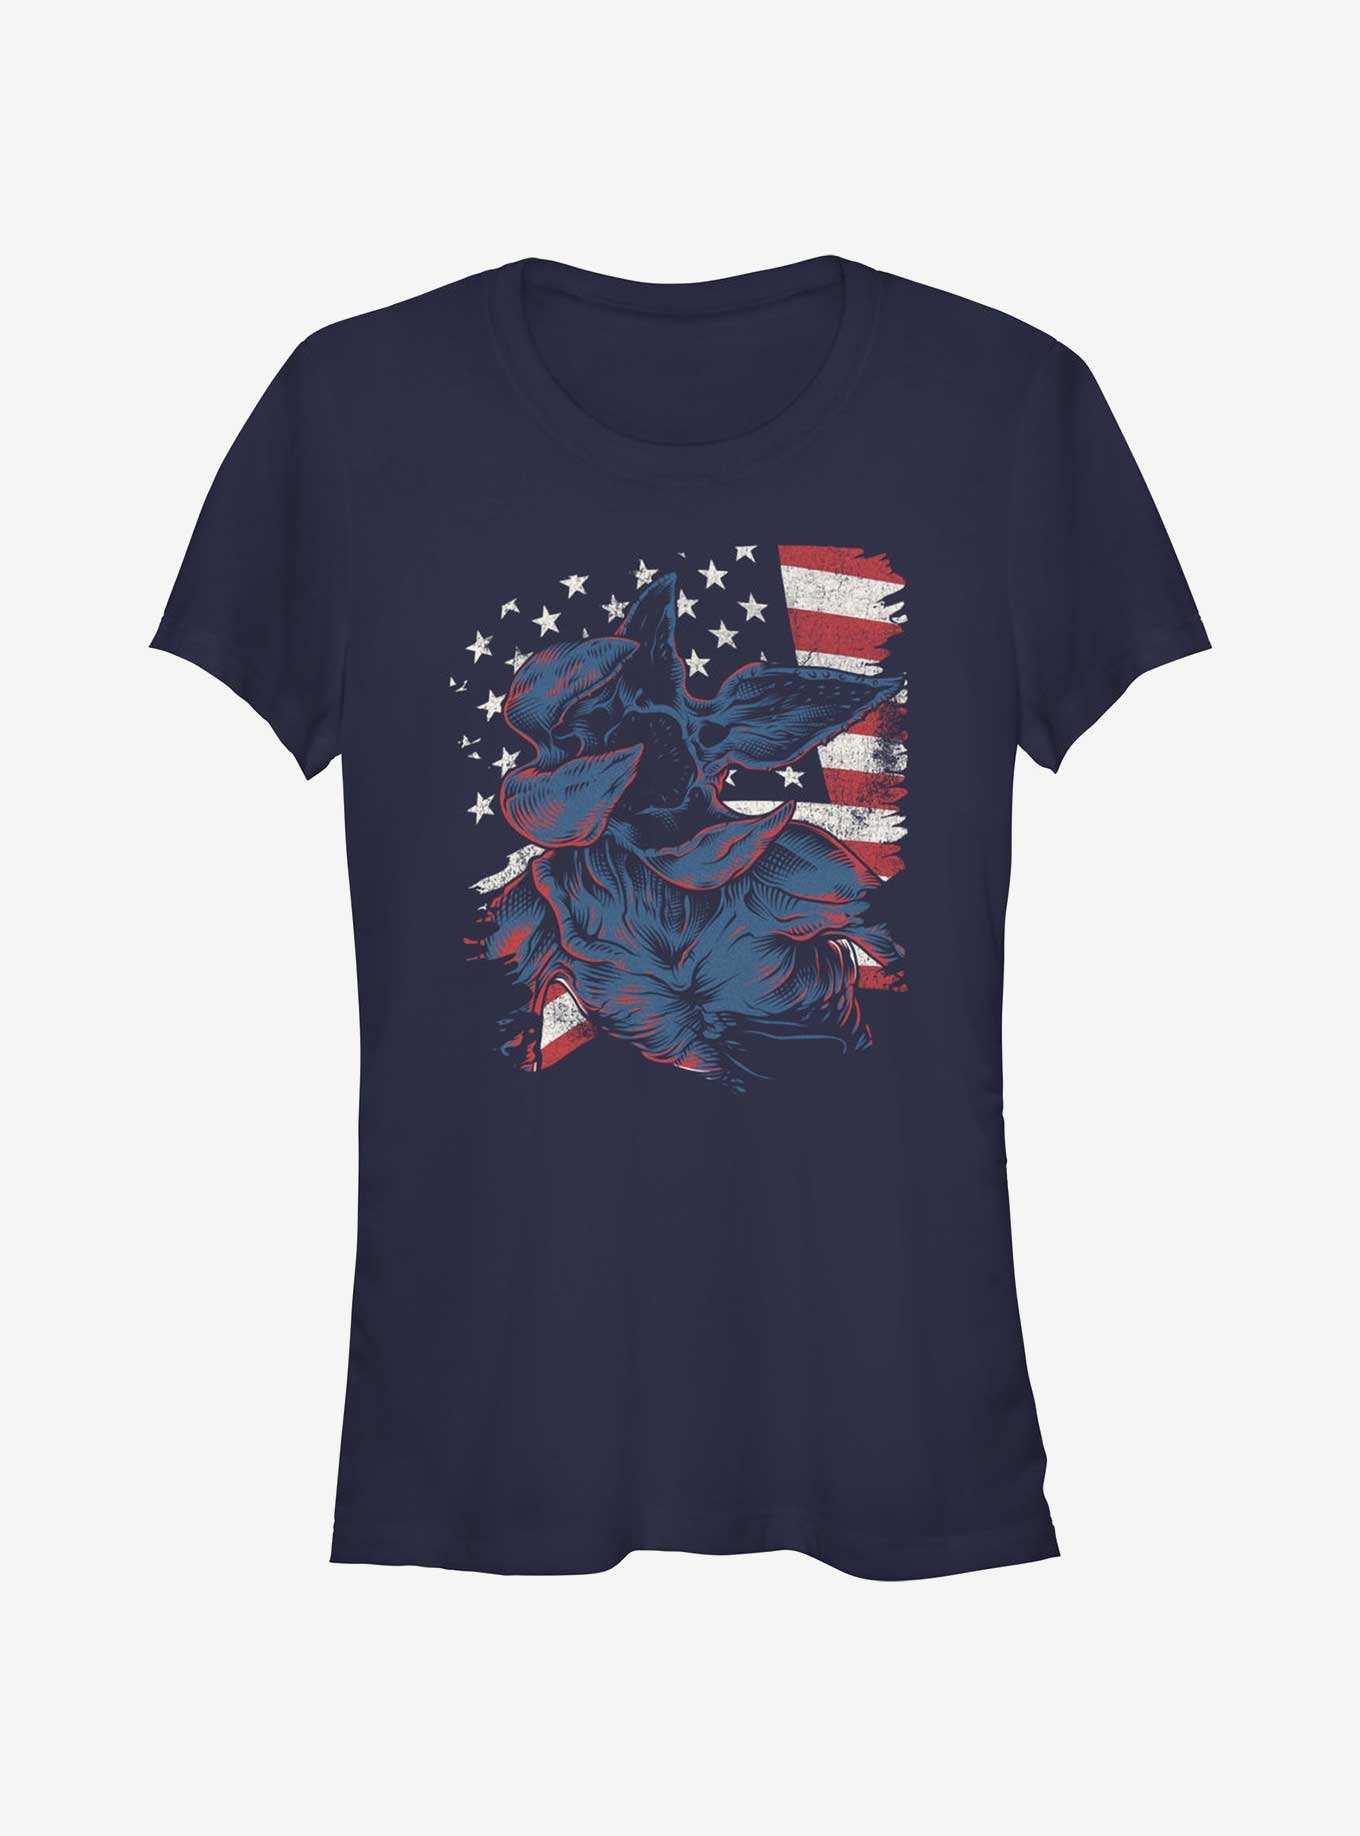 Stranger Things Demogorgon American Girls T-Shirt, , hi-res